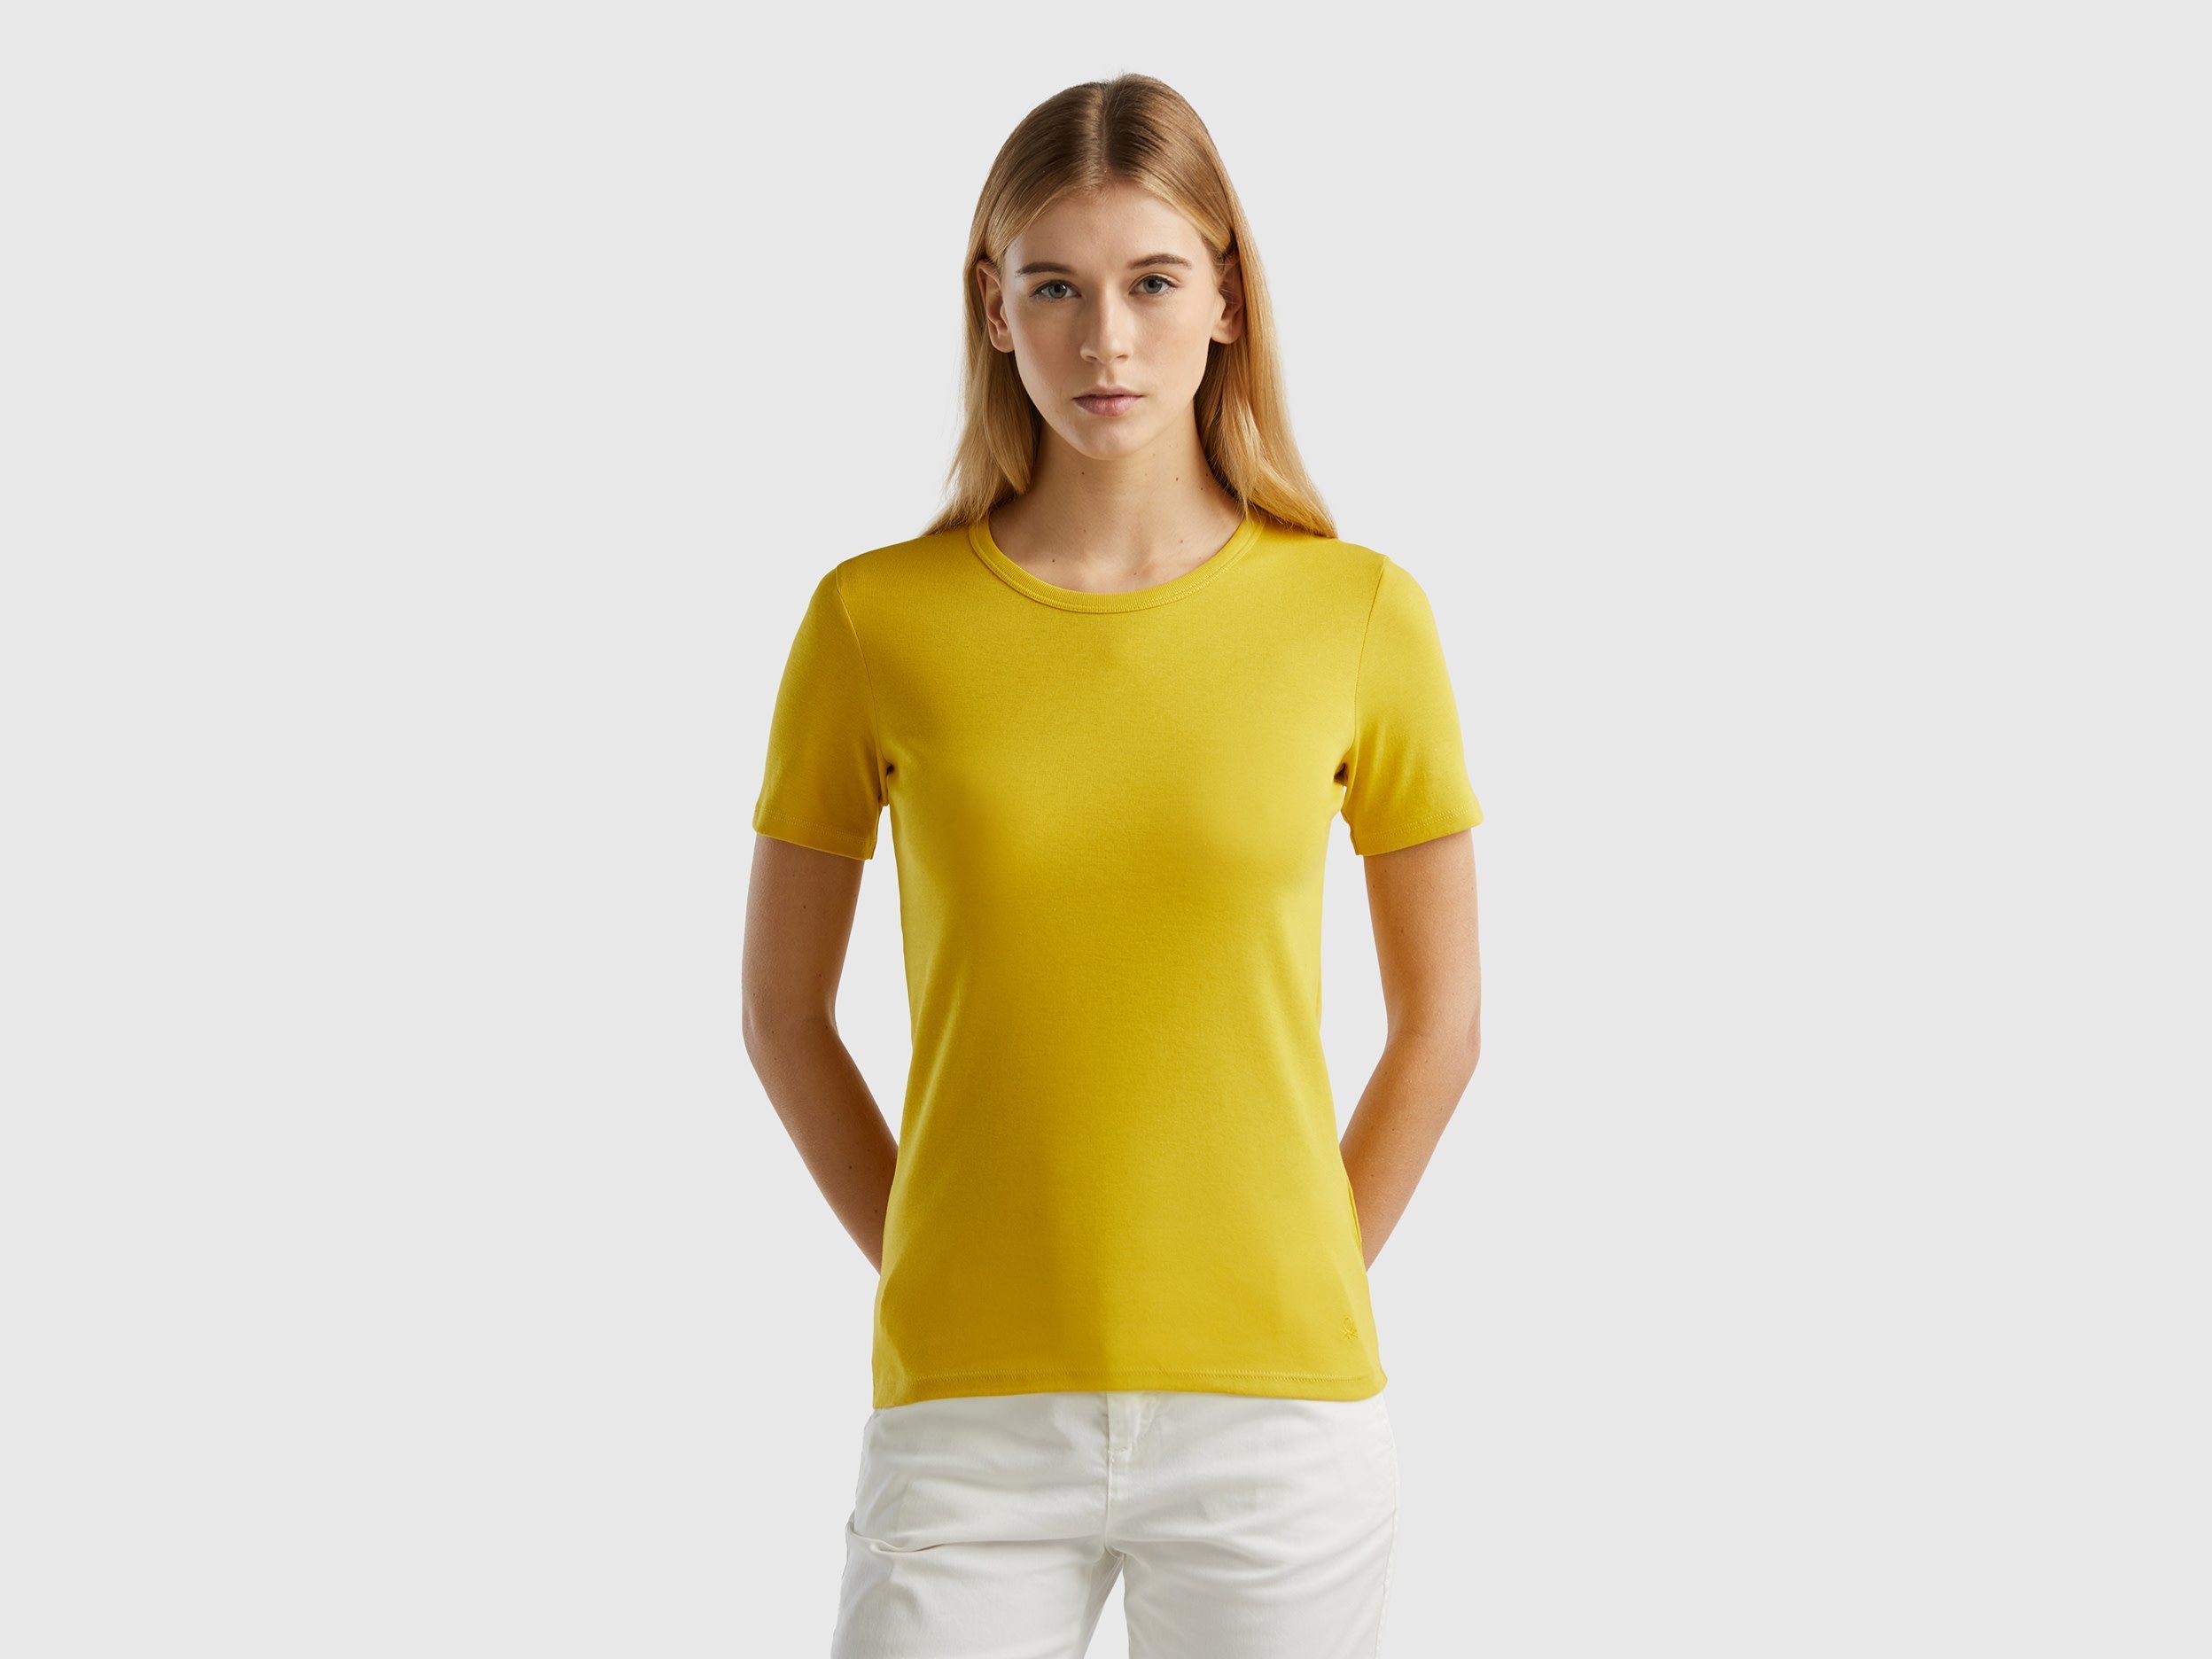 

женские желтые футболки Benetton 3ga2e16a0, Желтый